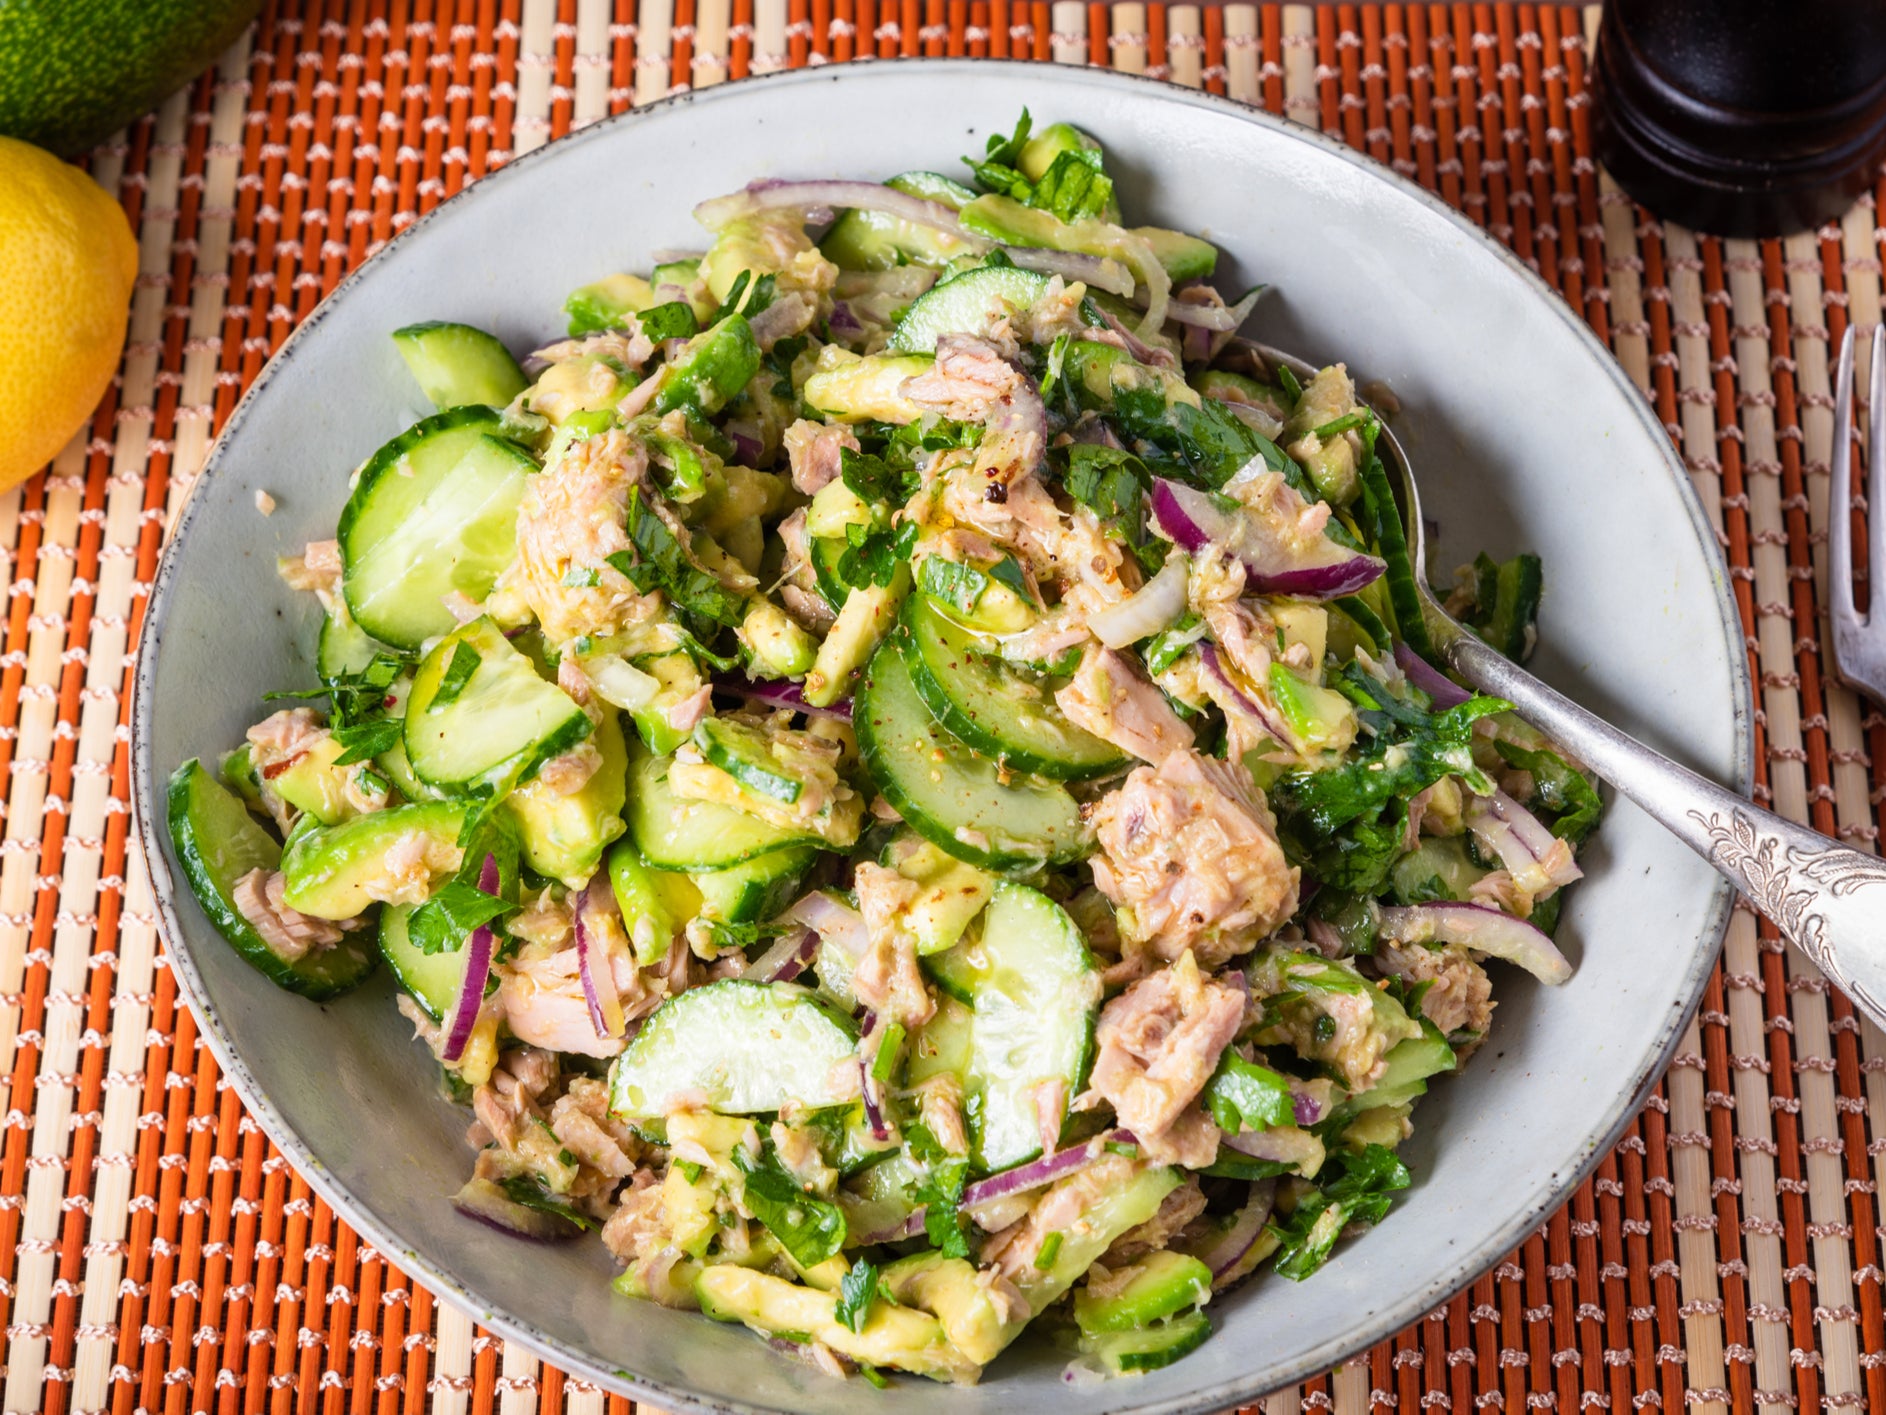 A no-cook tuna salad with chopped greens